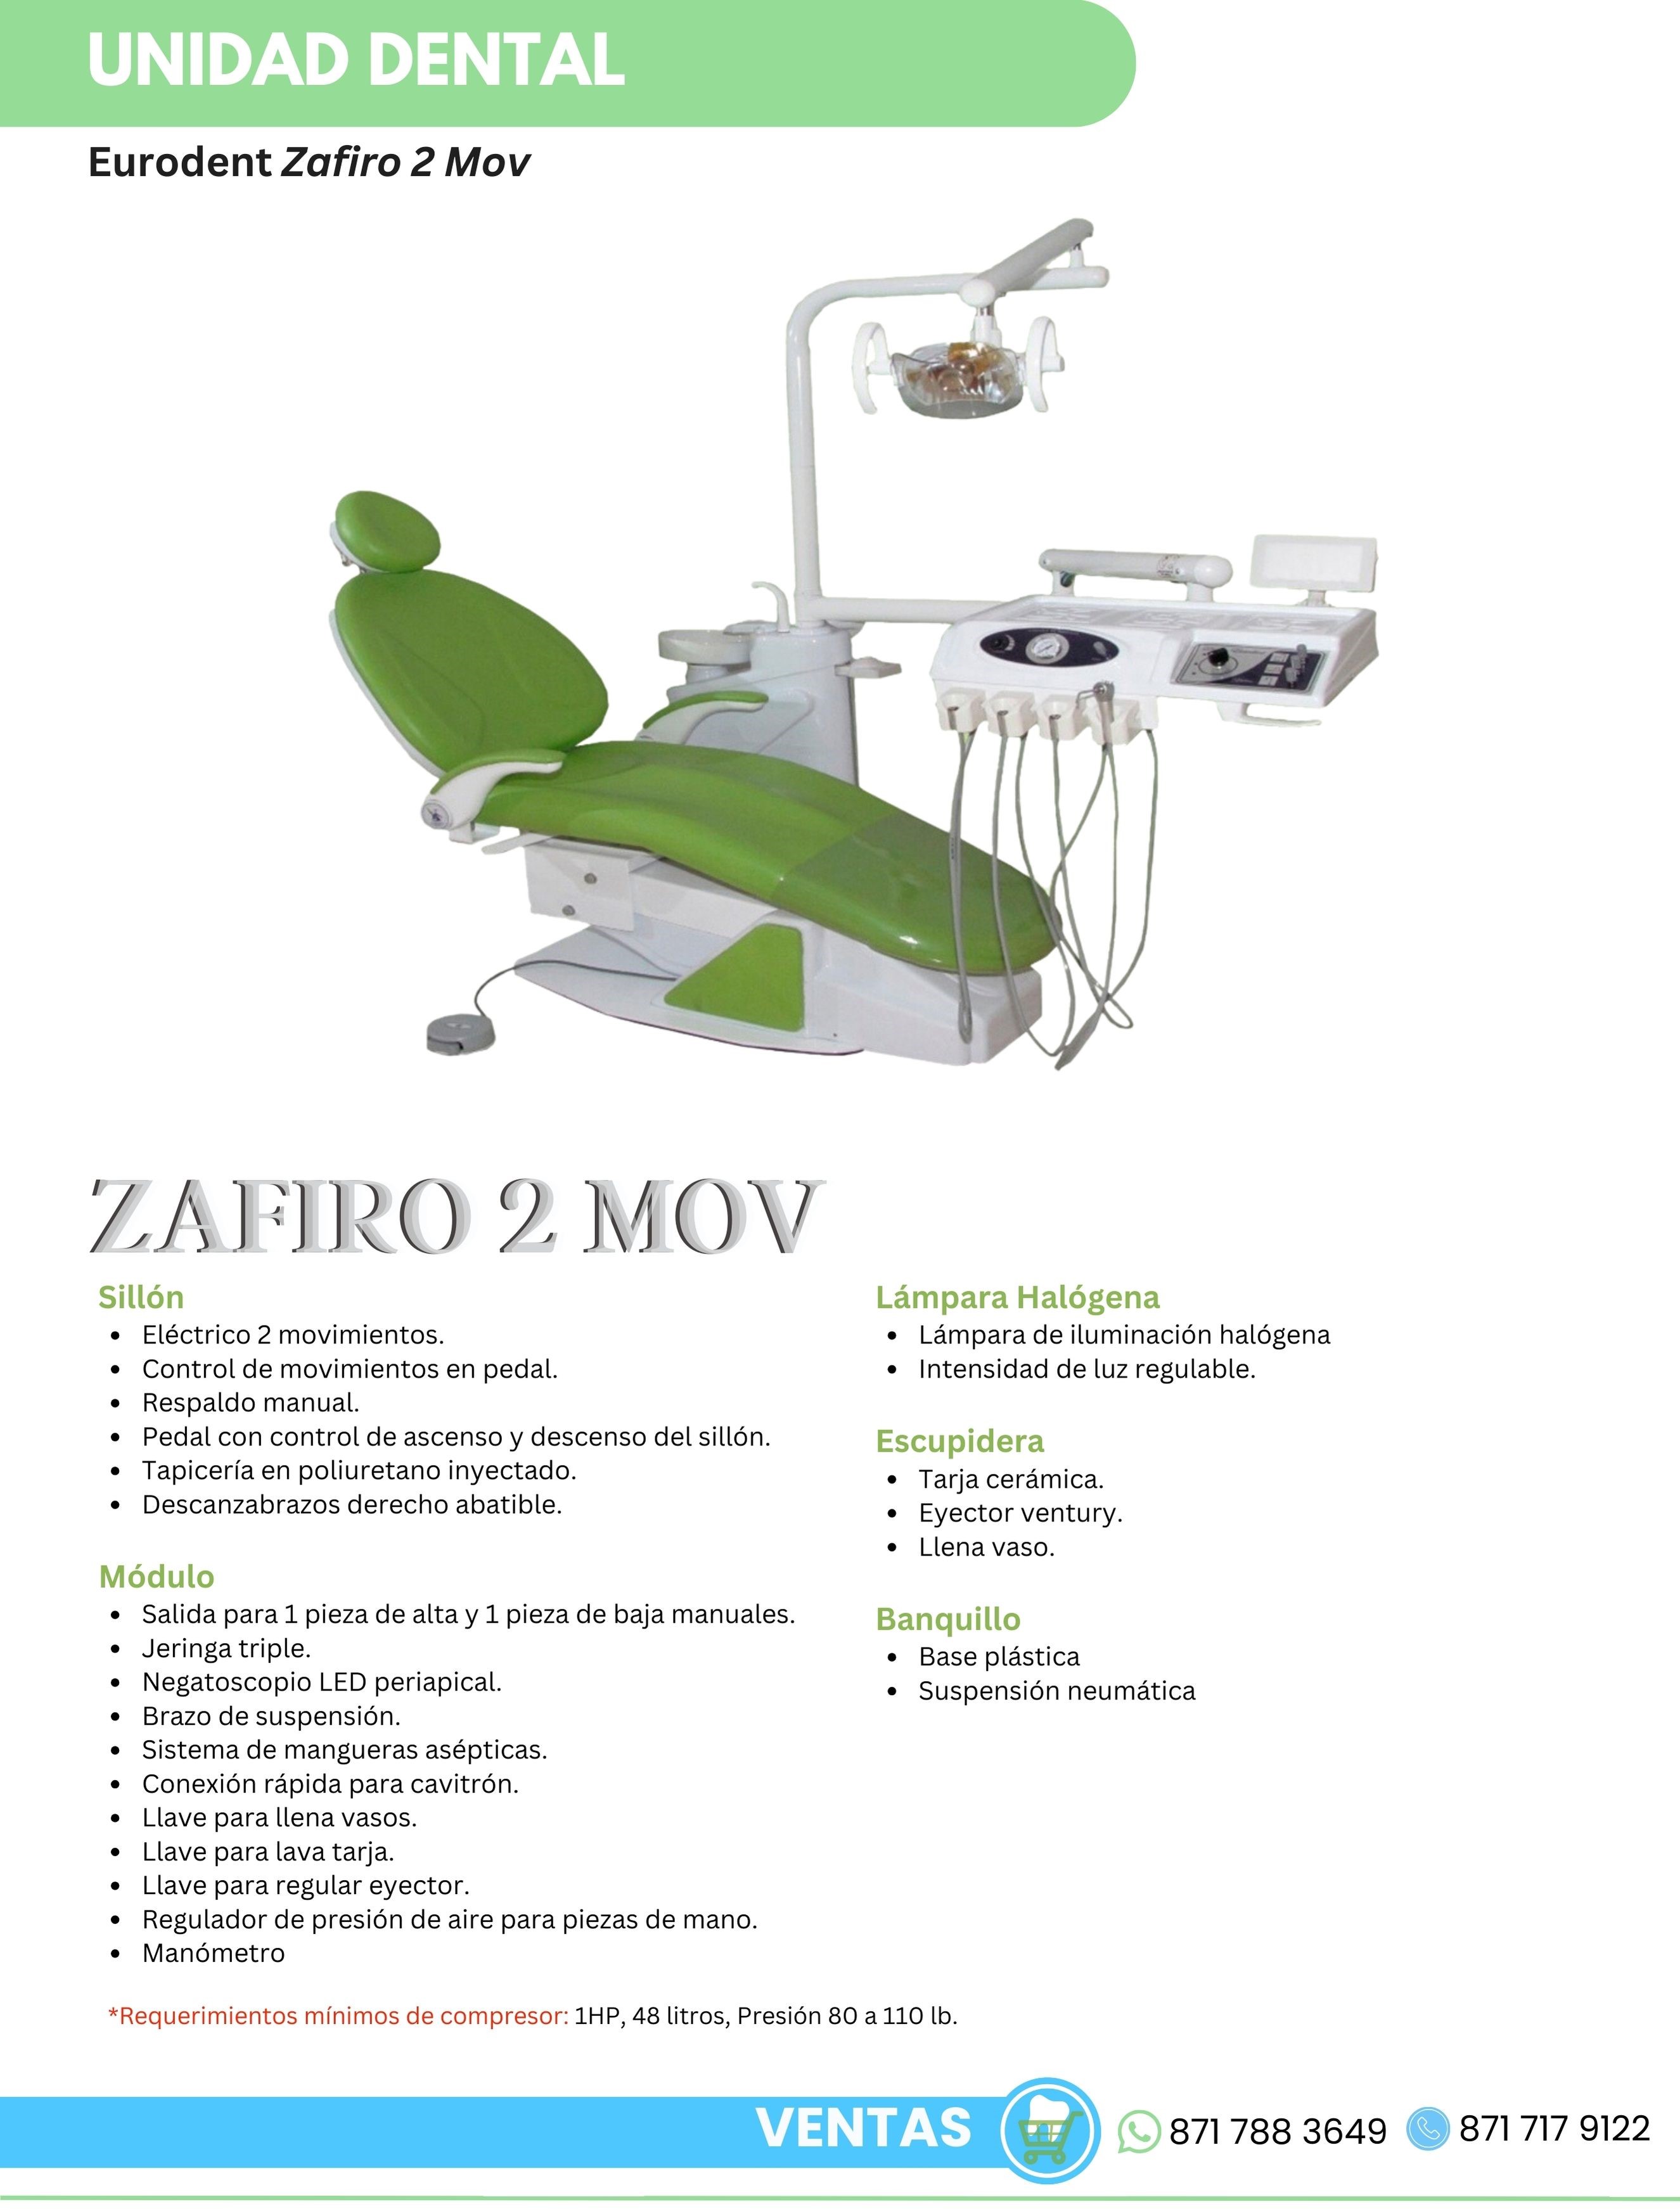 Unidad Dental Eléctrica Zafiro 2 Movimientos Eurodent